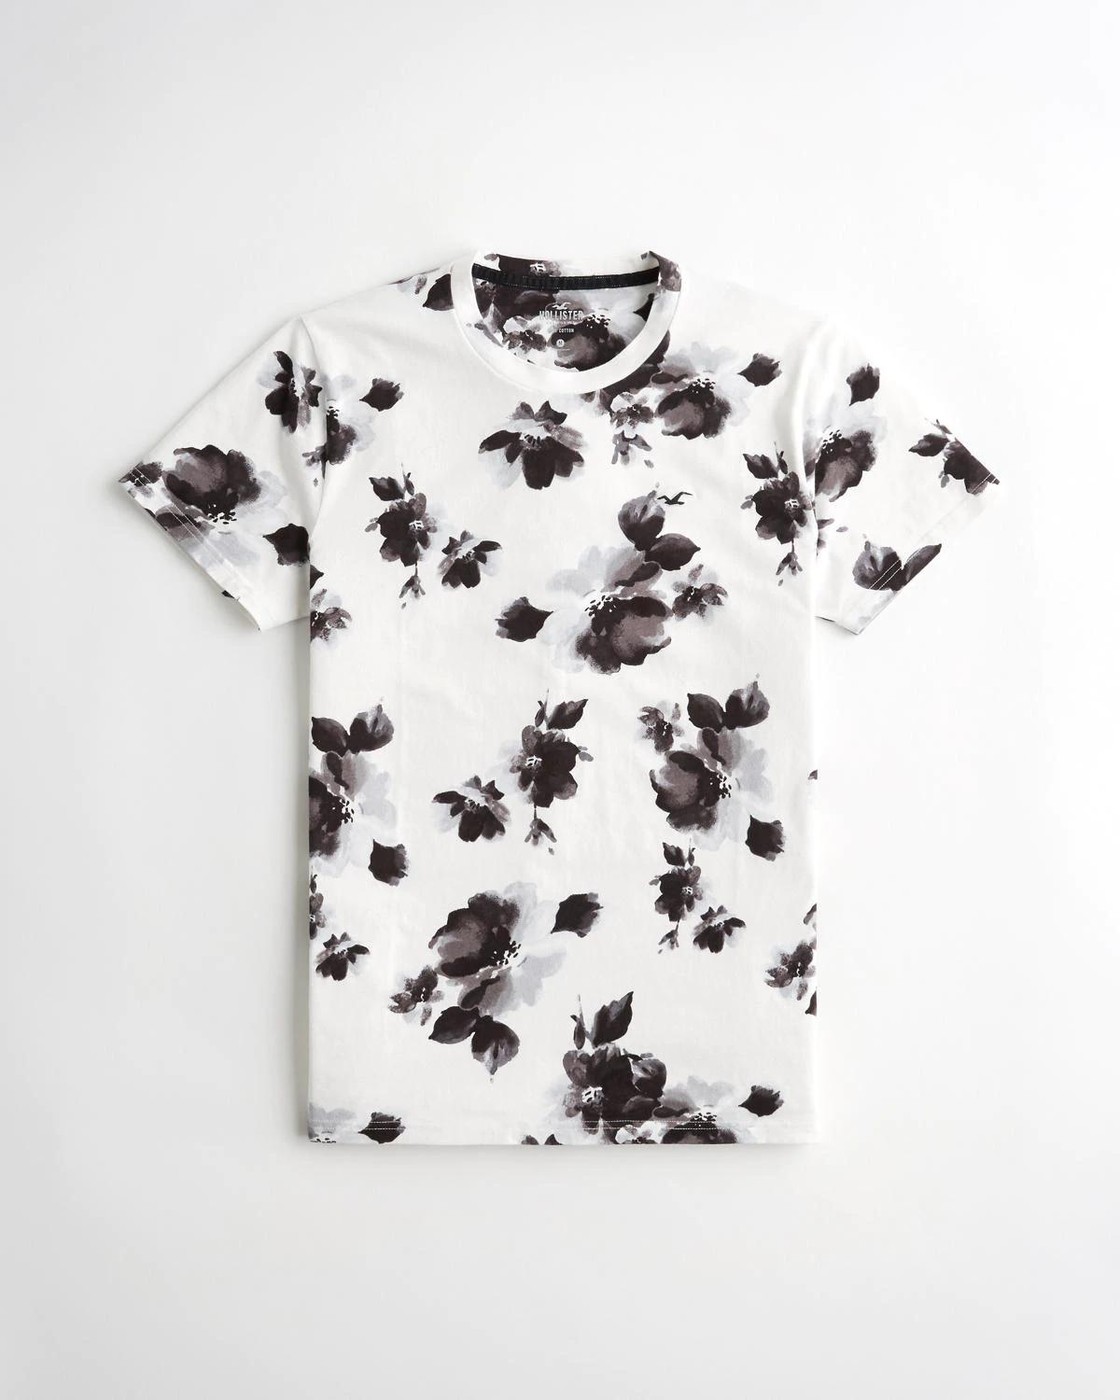 Белая футболка - мужская футболка Hollister, L, L